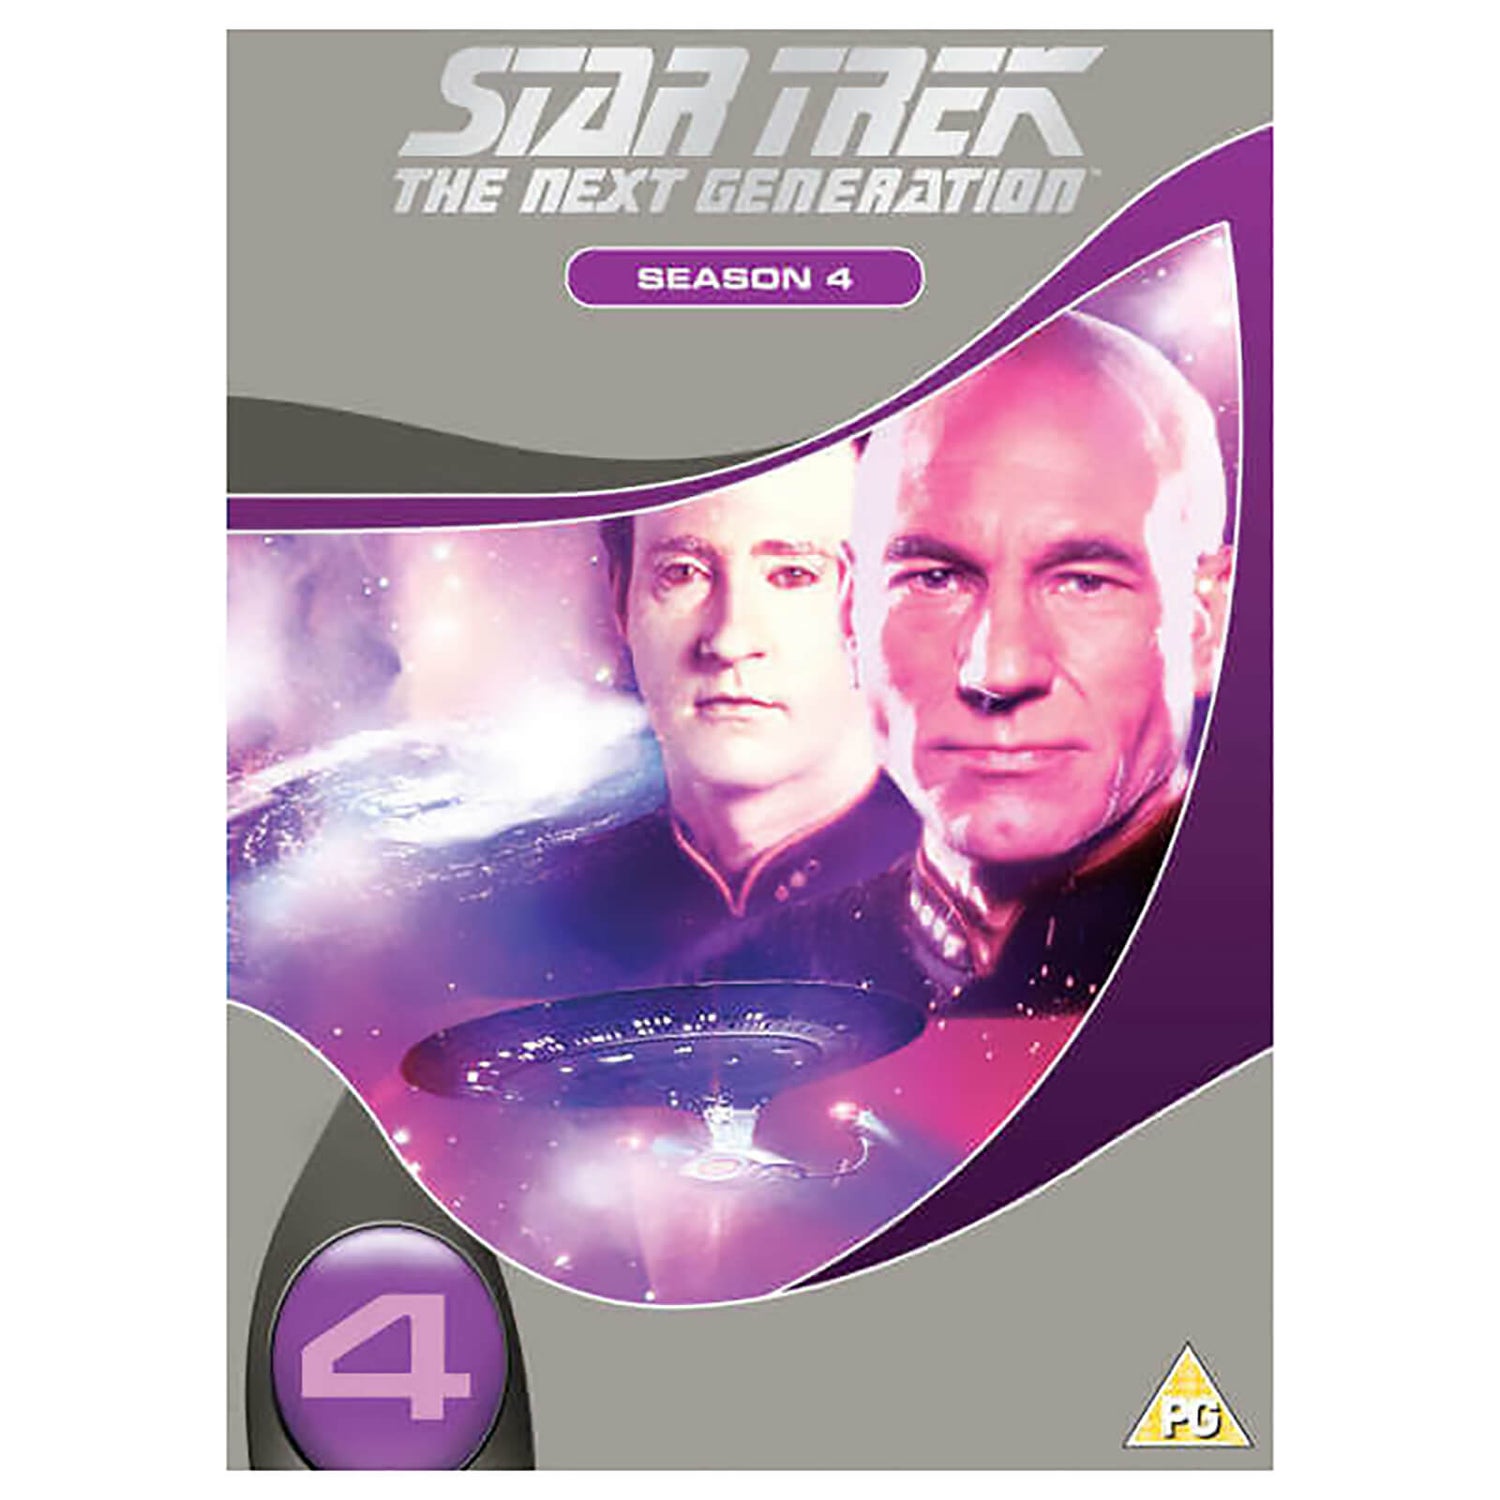 Star Trek The Next Generation - Season 4 [Slim Box]